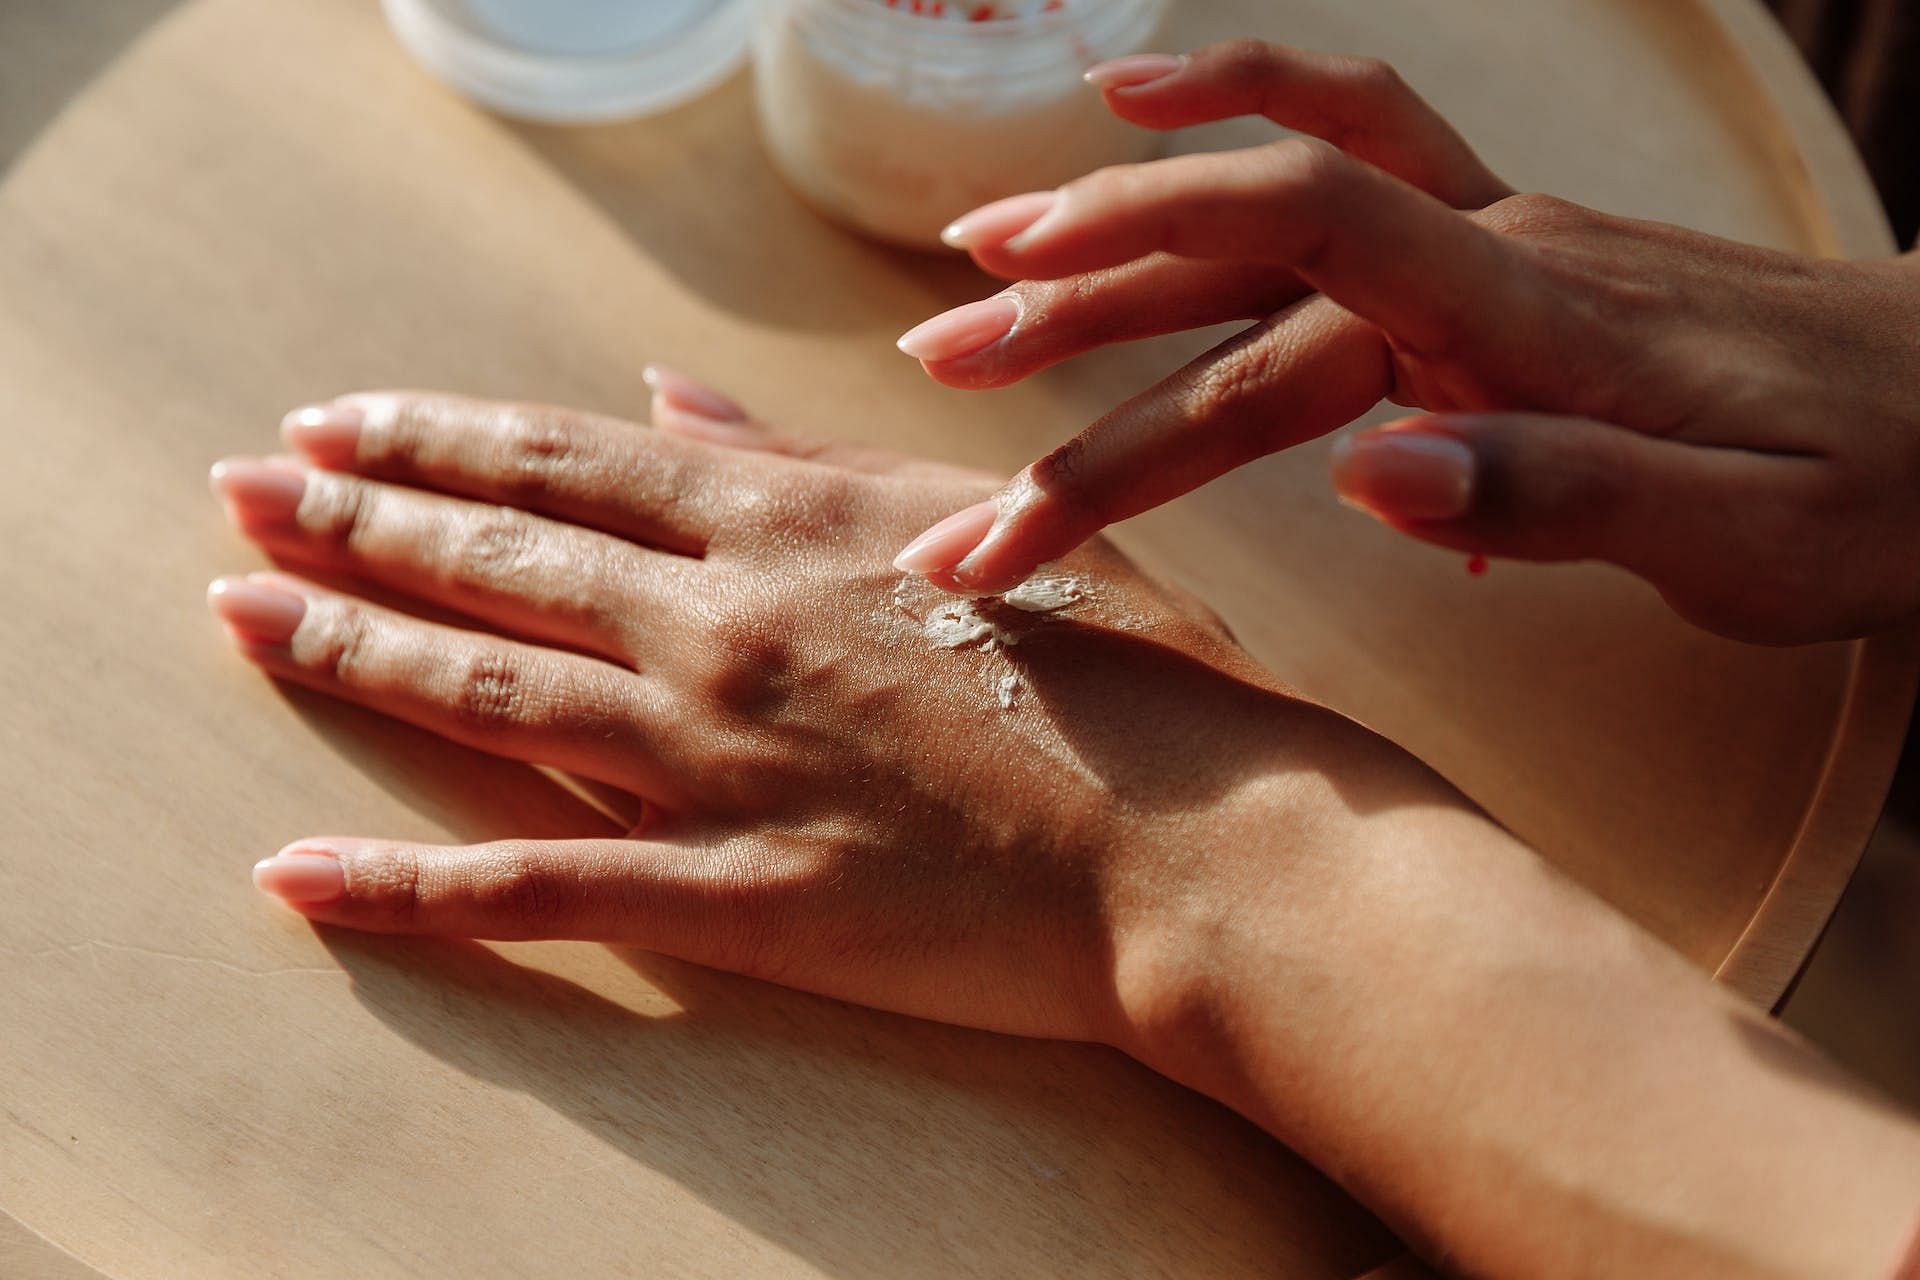 Sunscreen evens out uneven skin tone. (Image via Pexels/Thirdman)